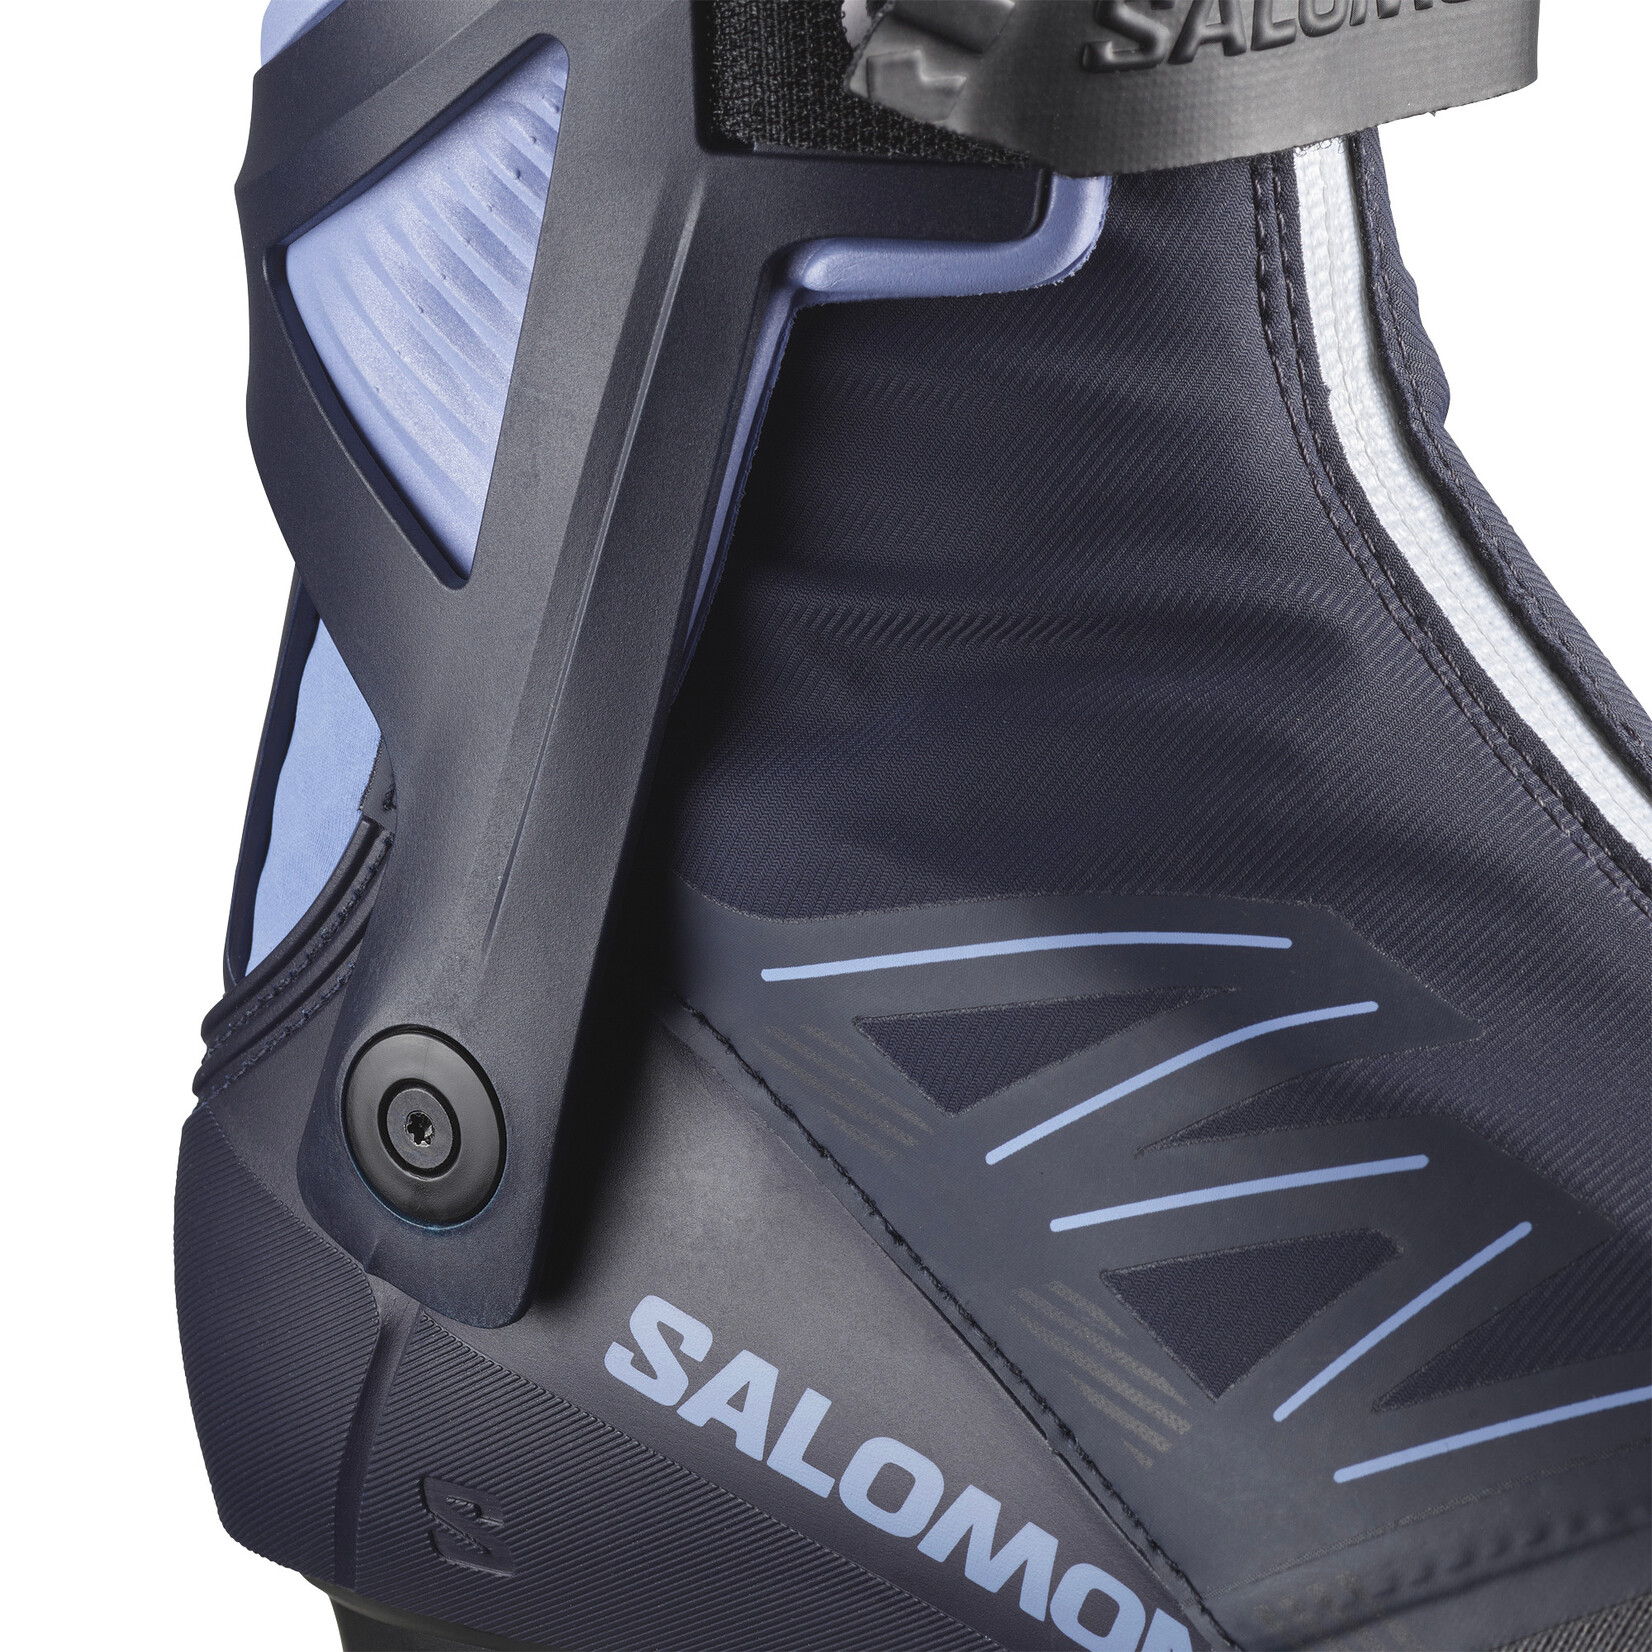 SALOMON Salomon Prolink RS8 Vitane Skate Boots 23/24